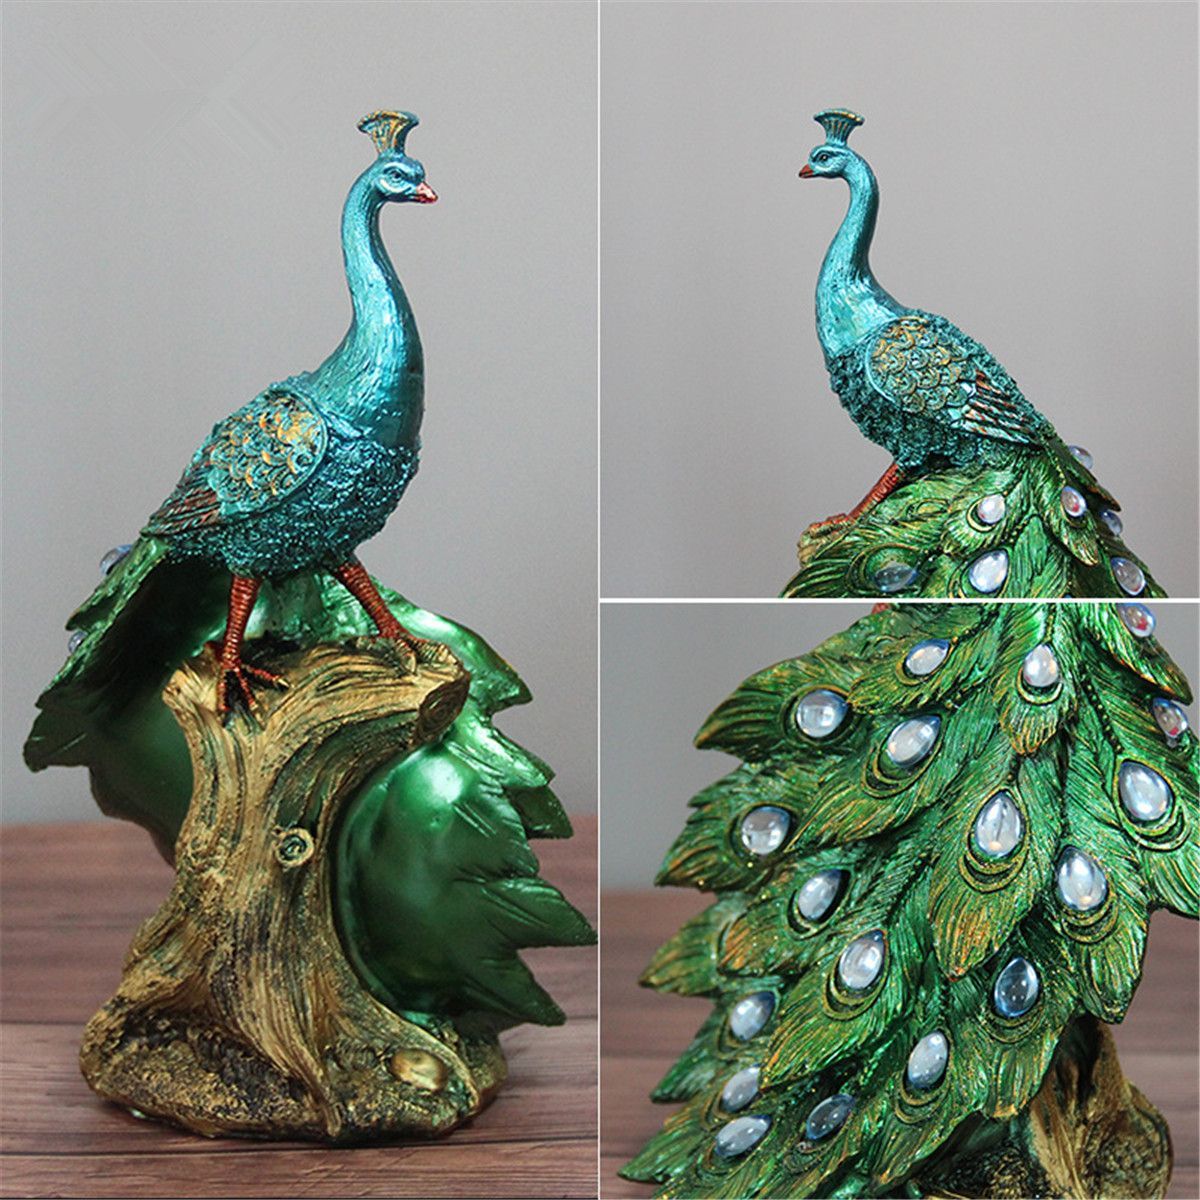 15x13x26cm-Peacock-Statue-Decorative-Home-Office-Art-Decorations-Desktop-Gift-1475553